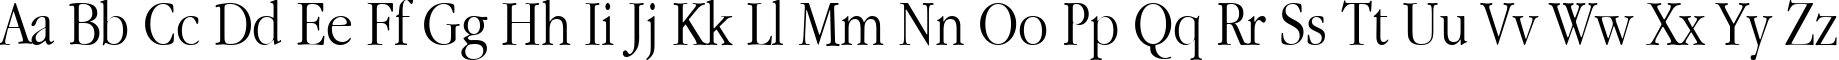 Пример написания английского алфавита шрифтом Apple Garamond Light